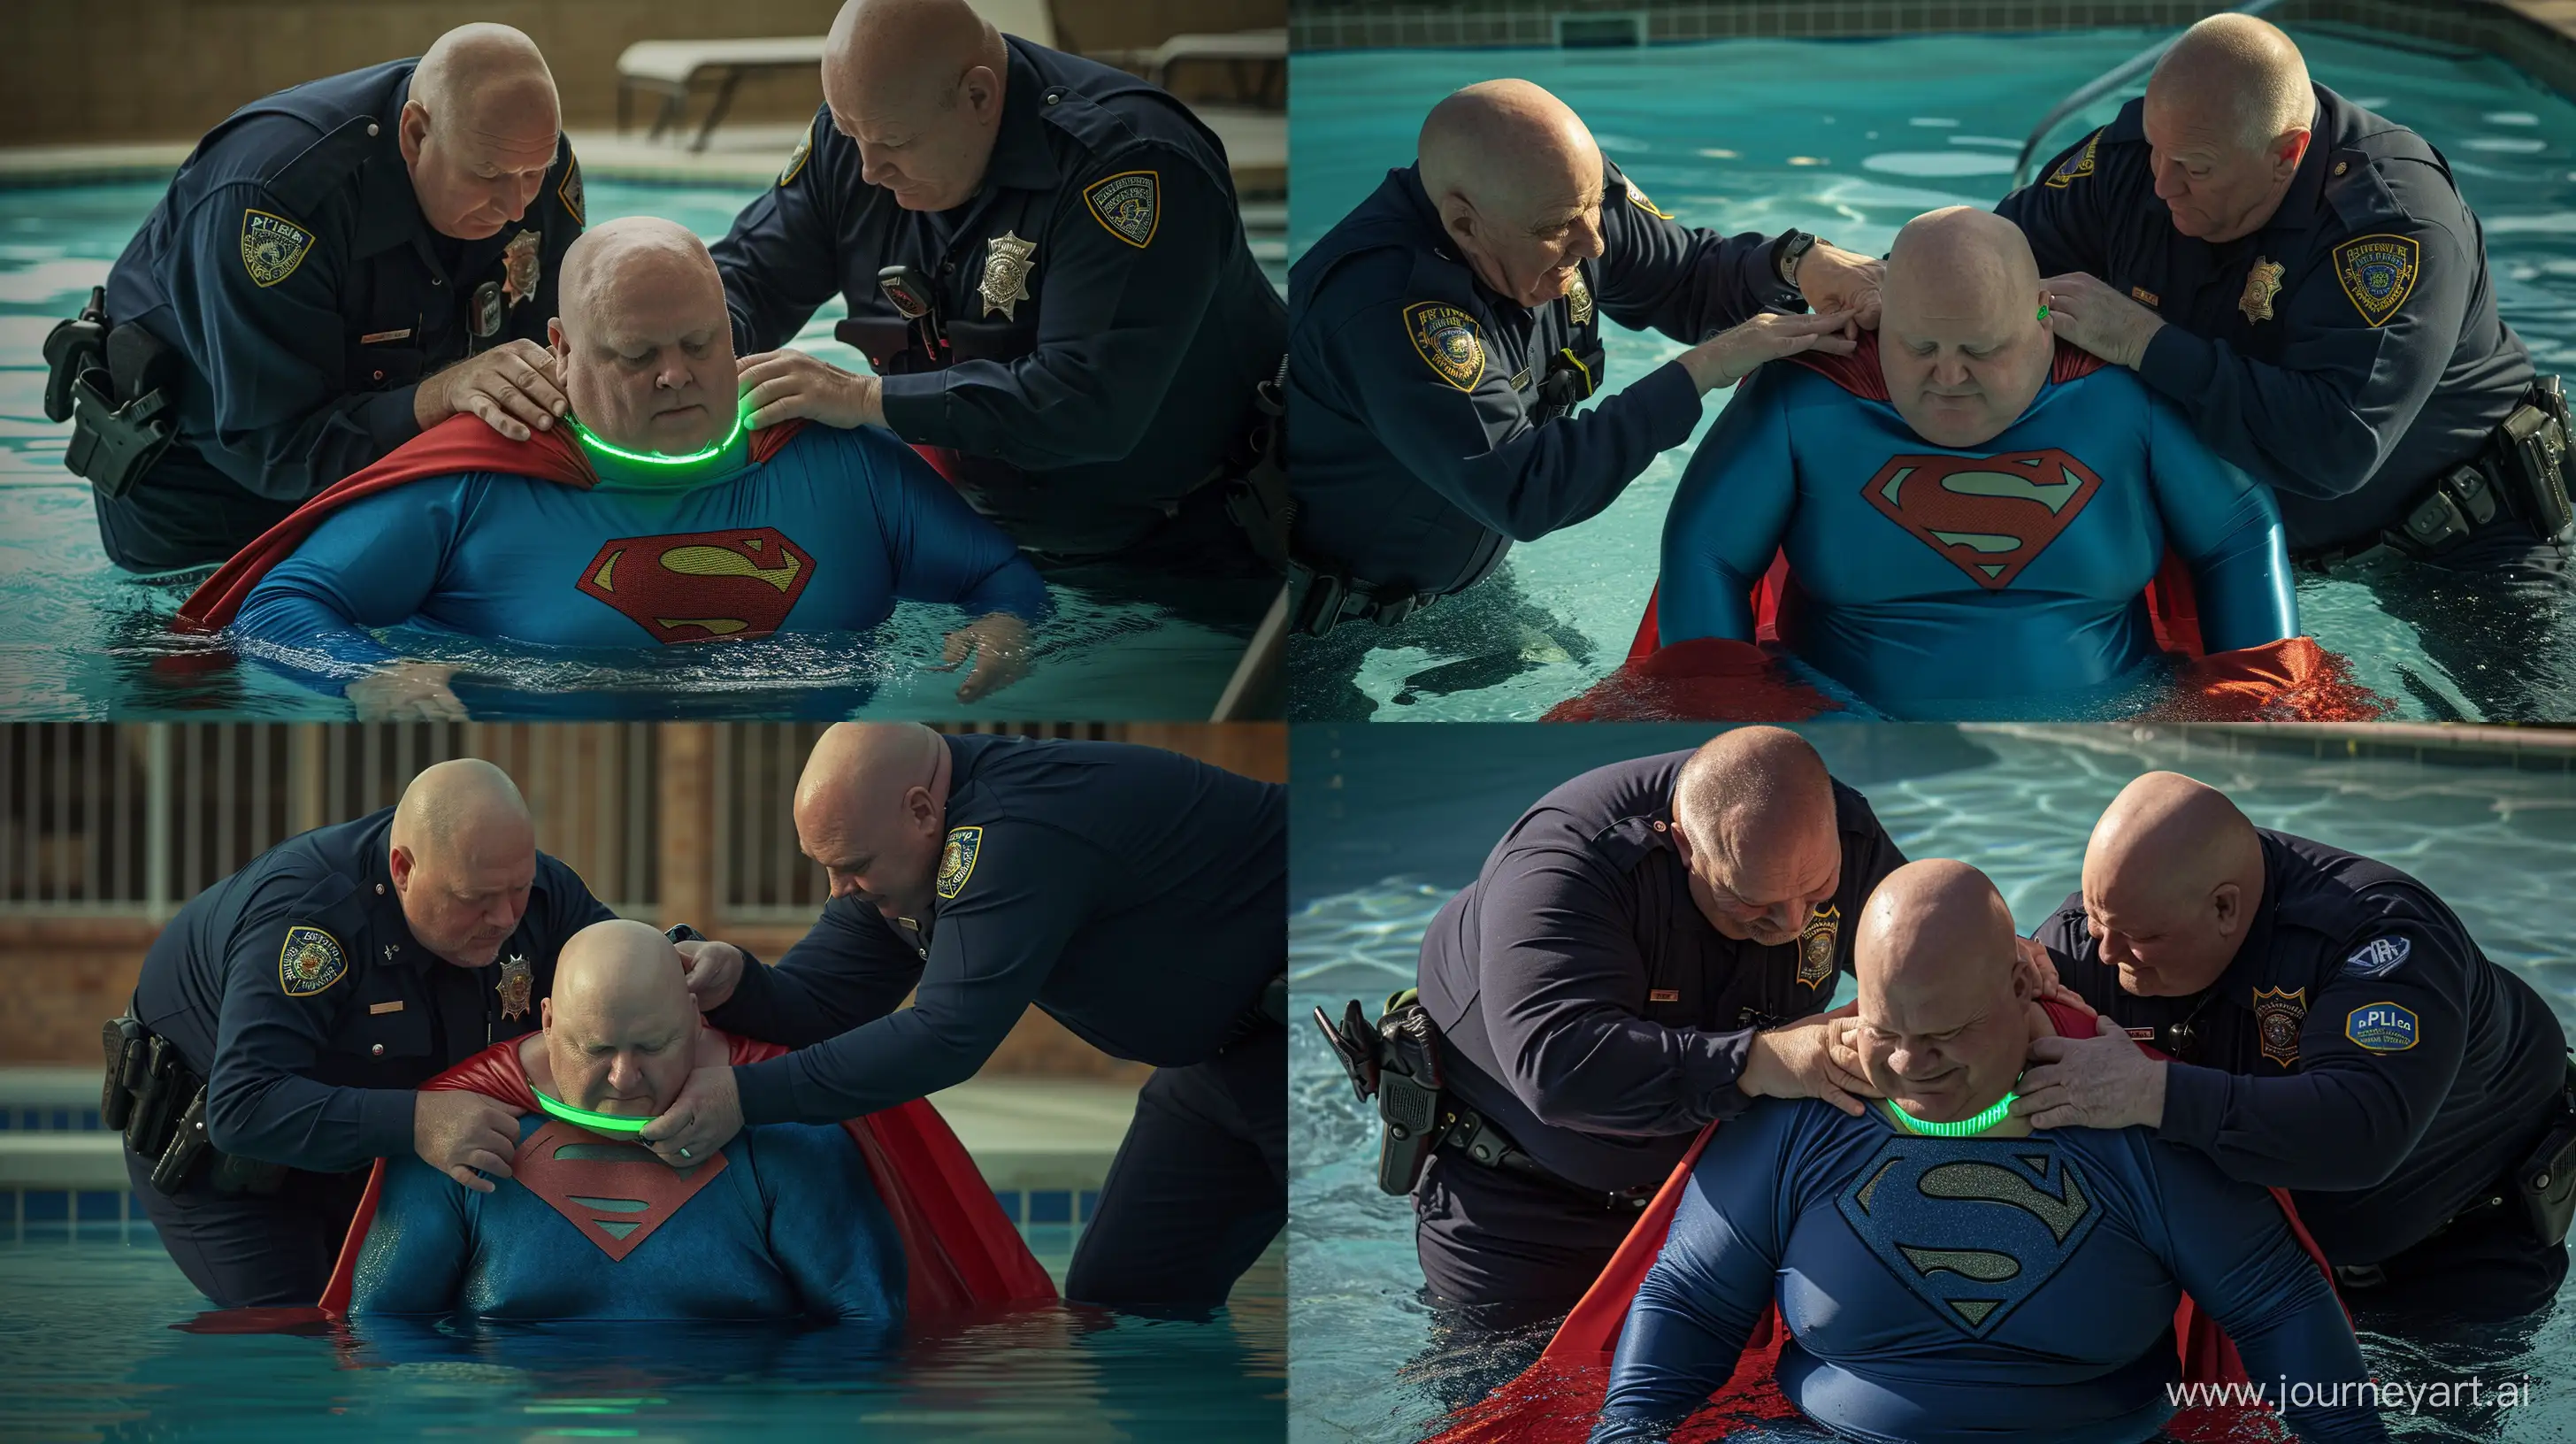 Elderly-Men-in-Police-Uniforms-Collaring-Superman-in-a-Pool